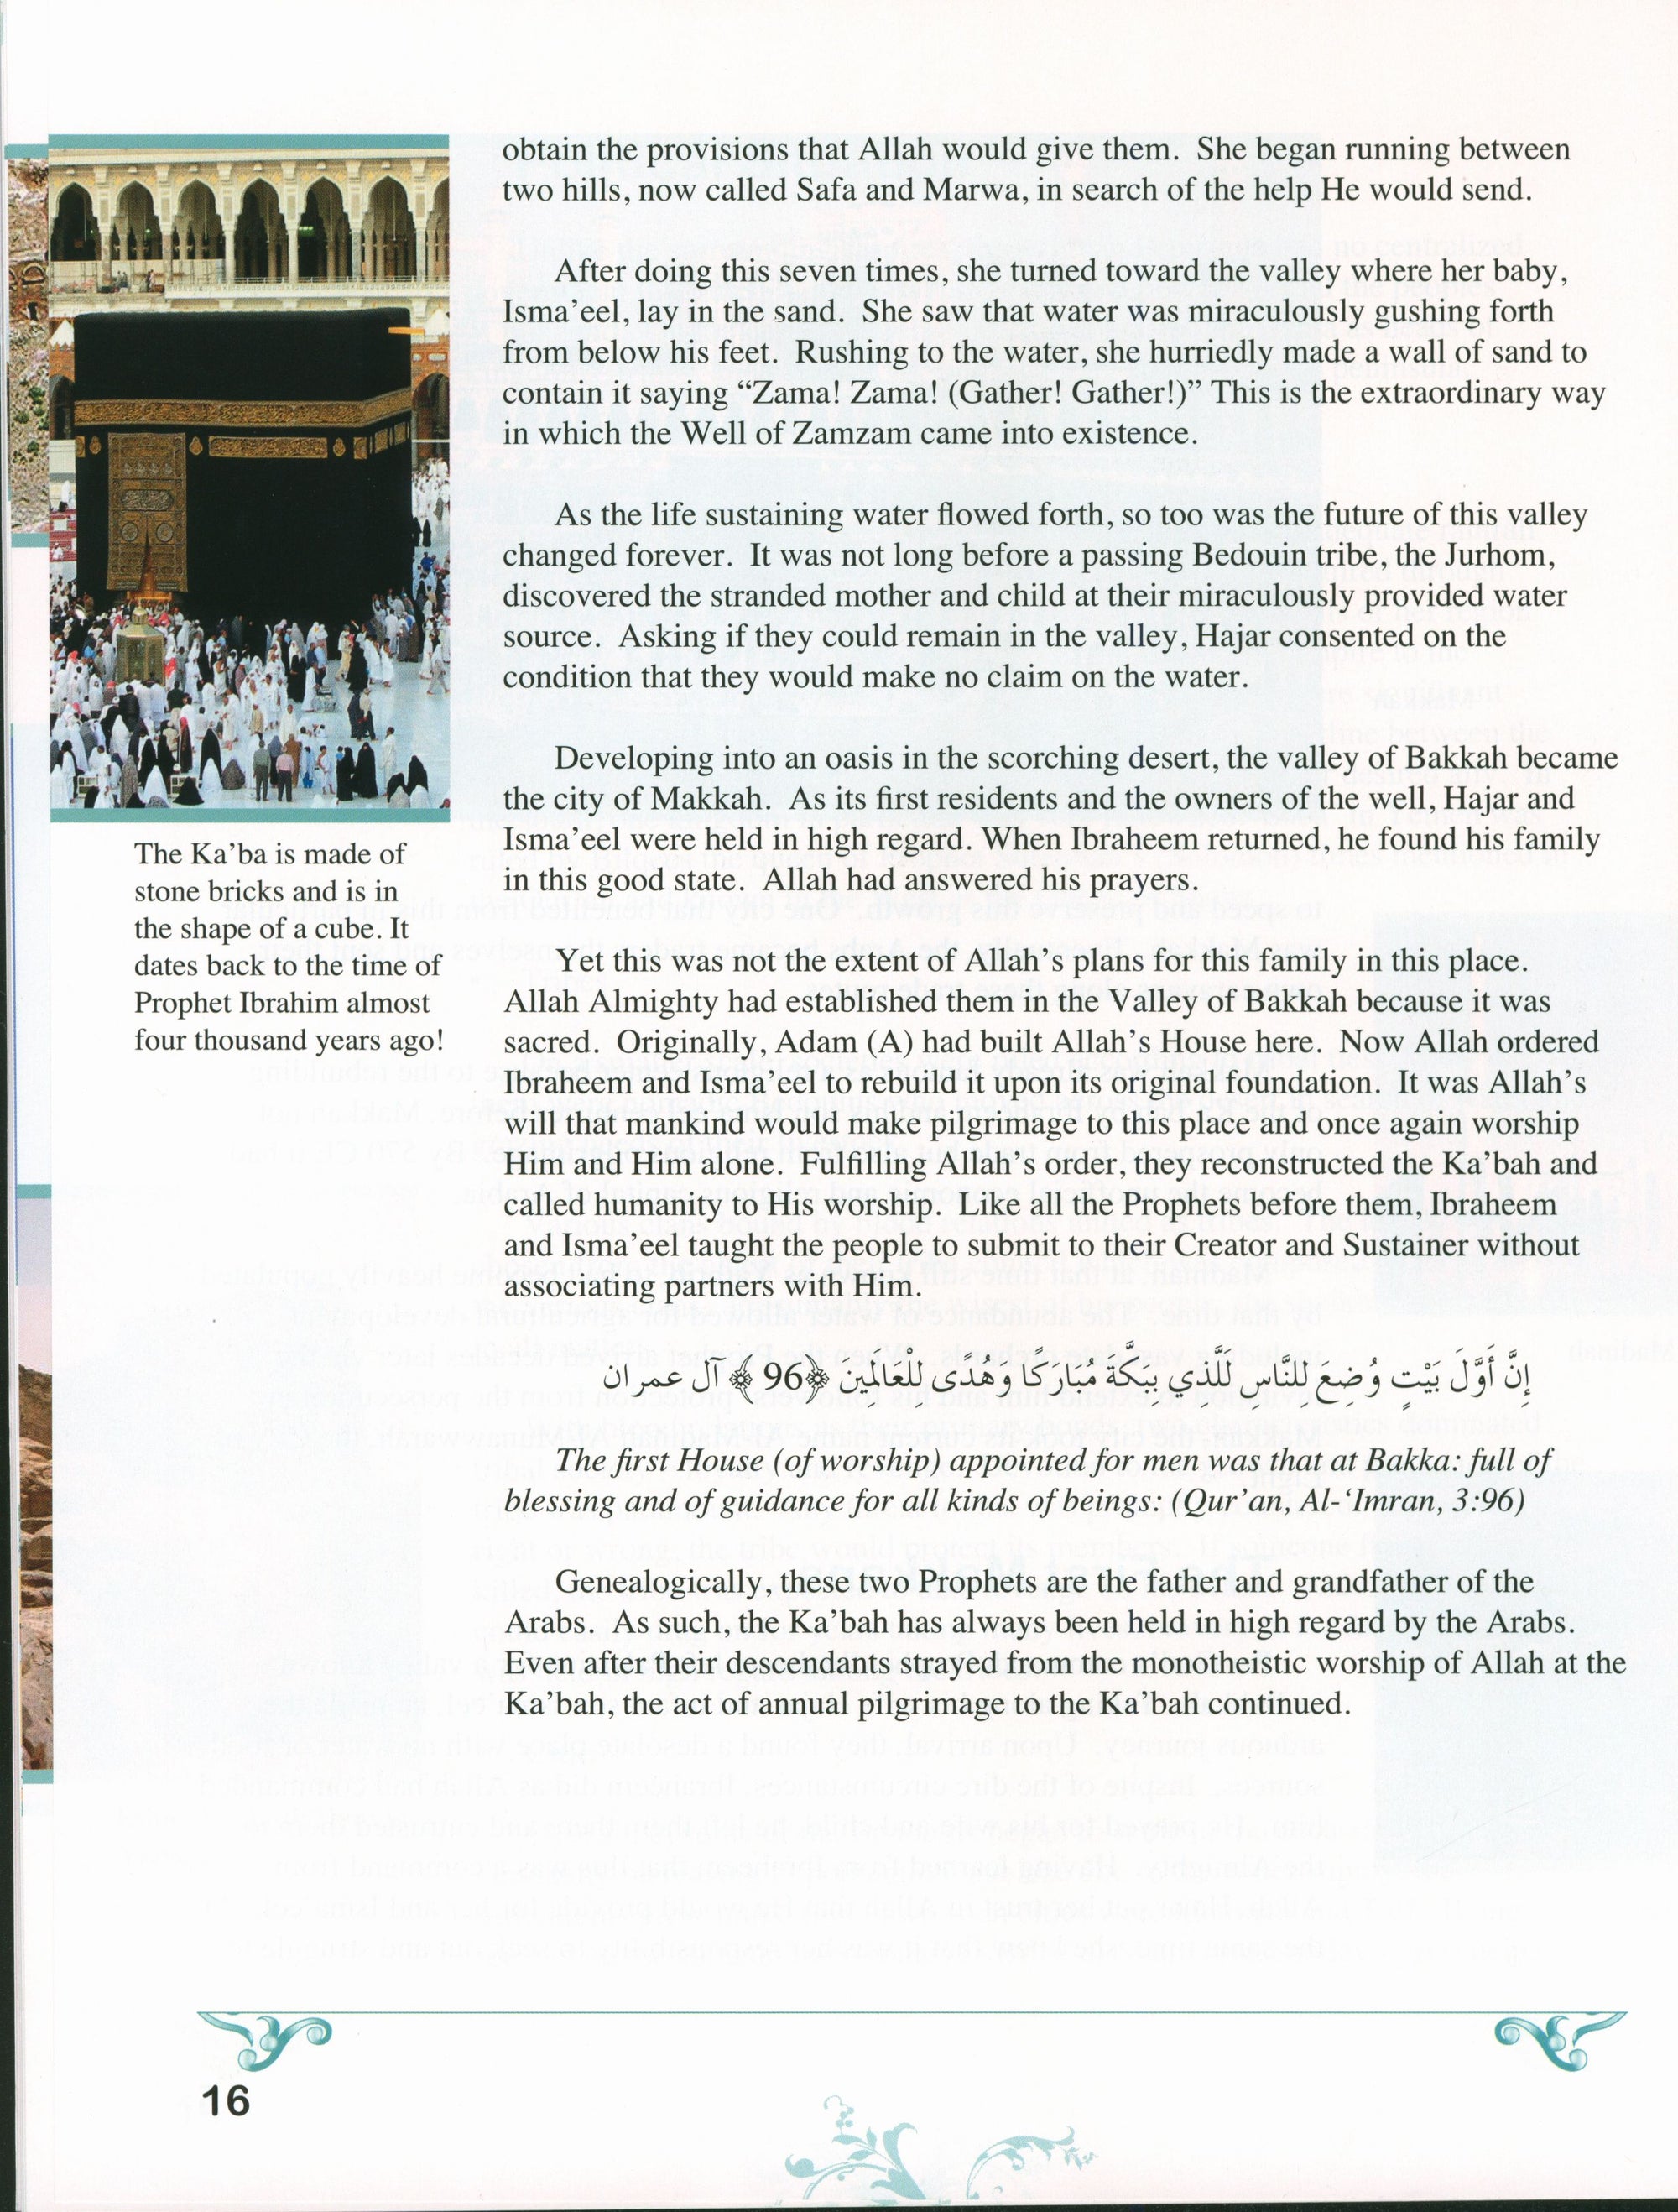 Living Islam Level 3 - Prophet of Mercy, The Life Story of Prophet Muhammad (10th Grade)